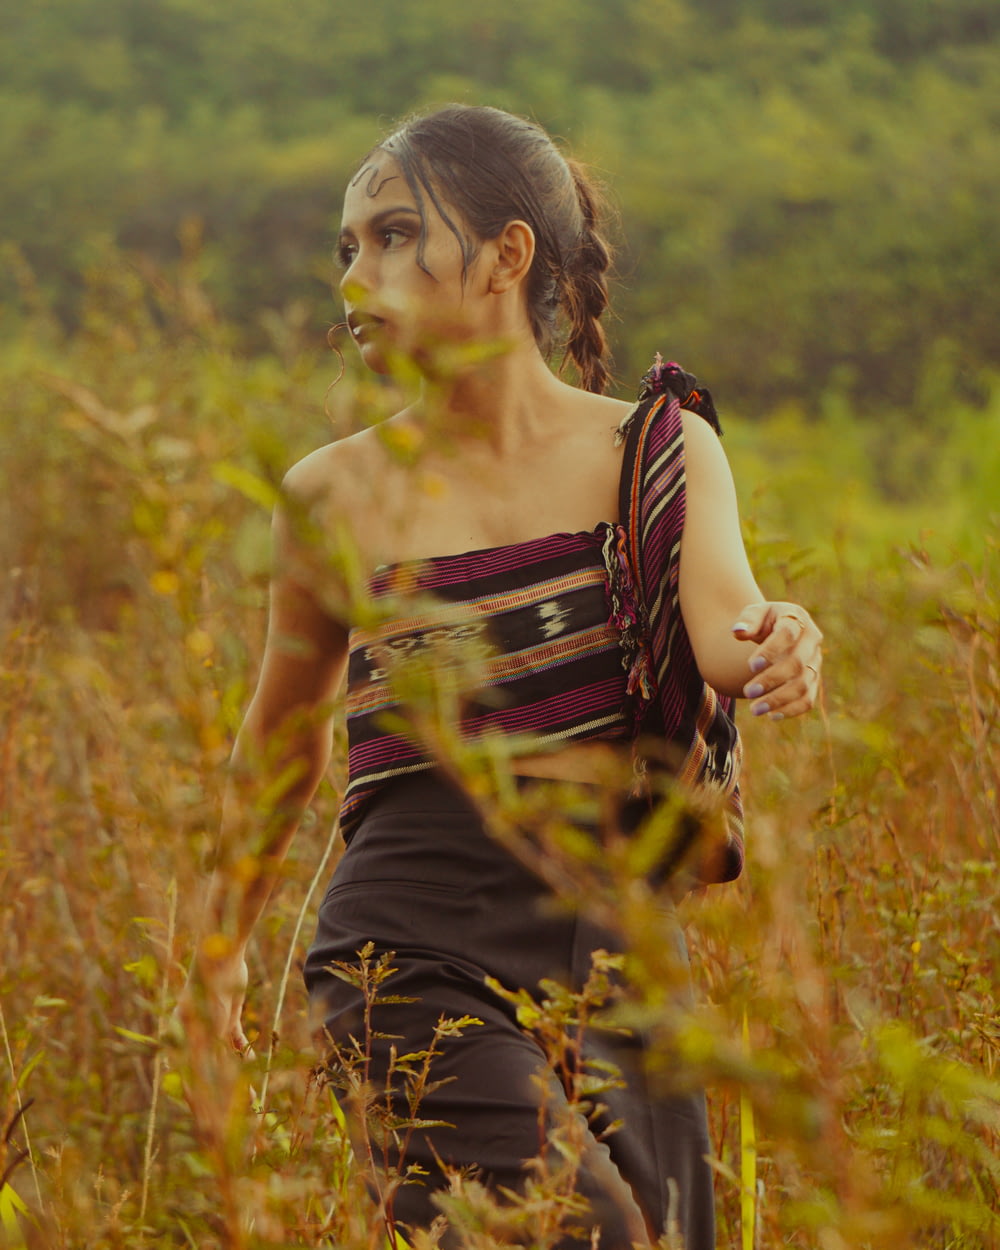 a young girl walking through a field of tall grass